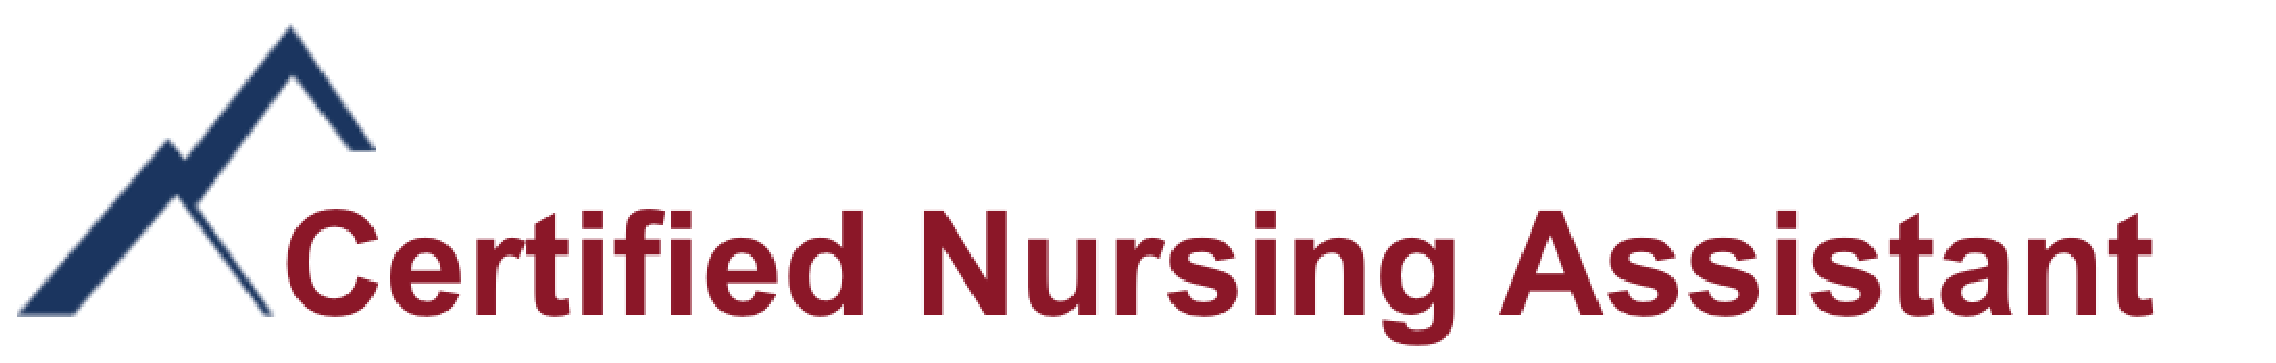 certified nursing assistant